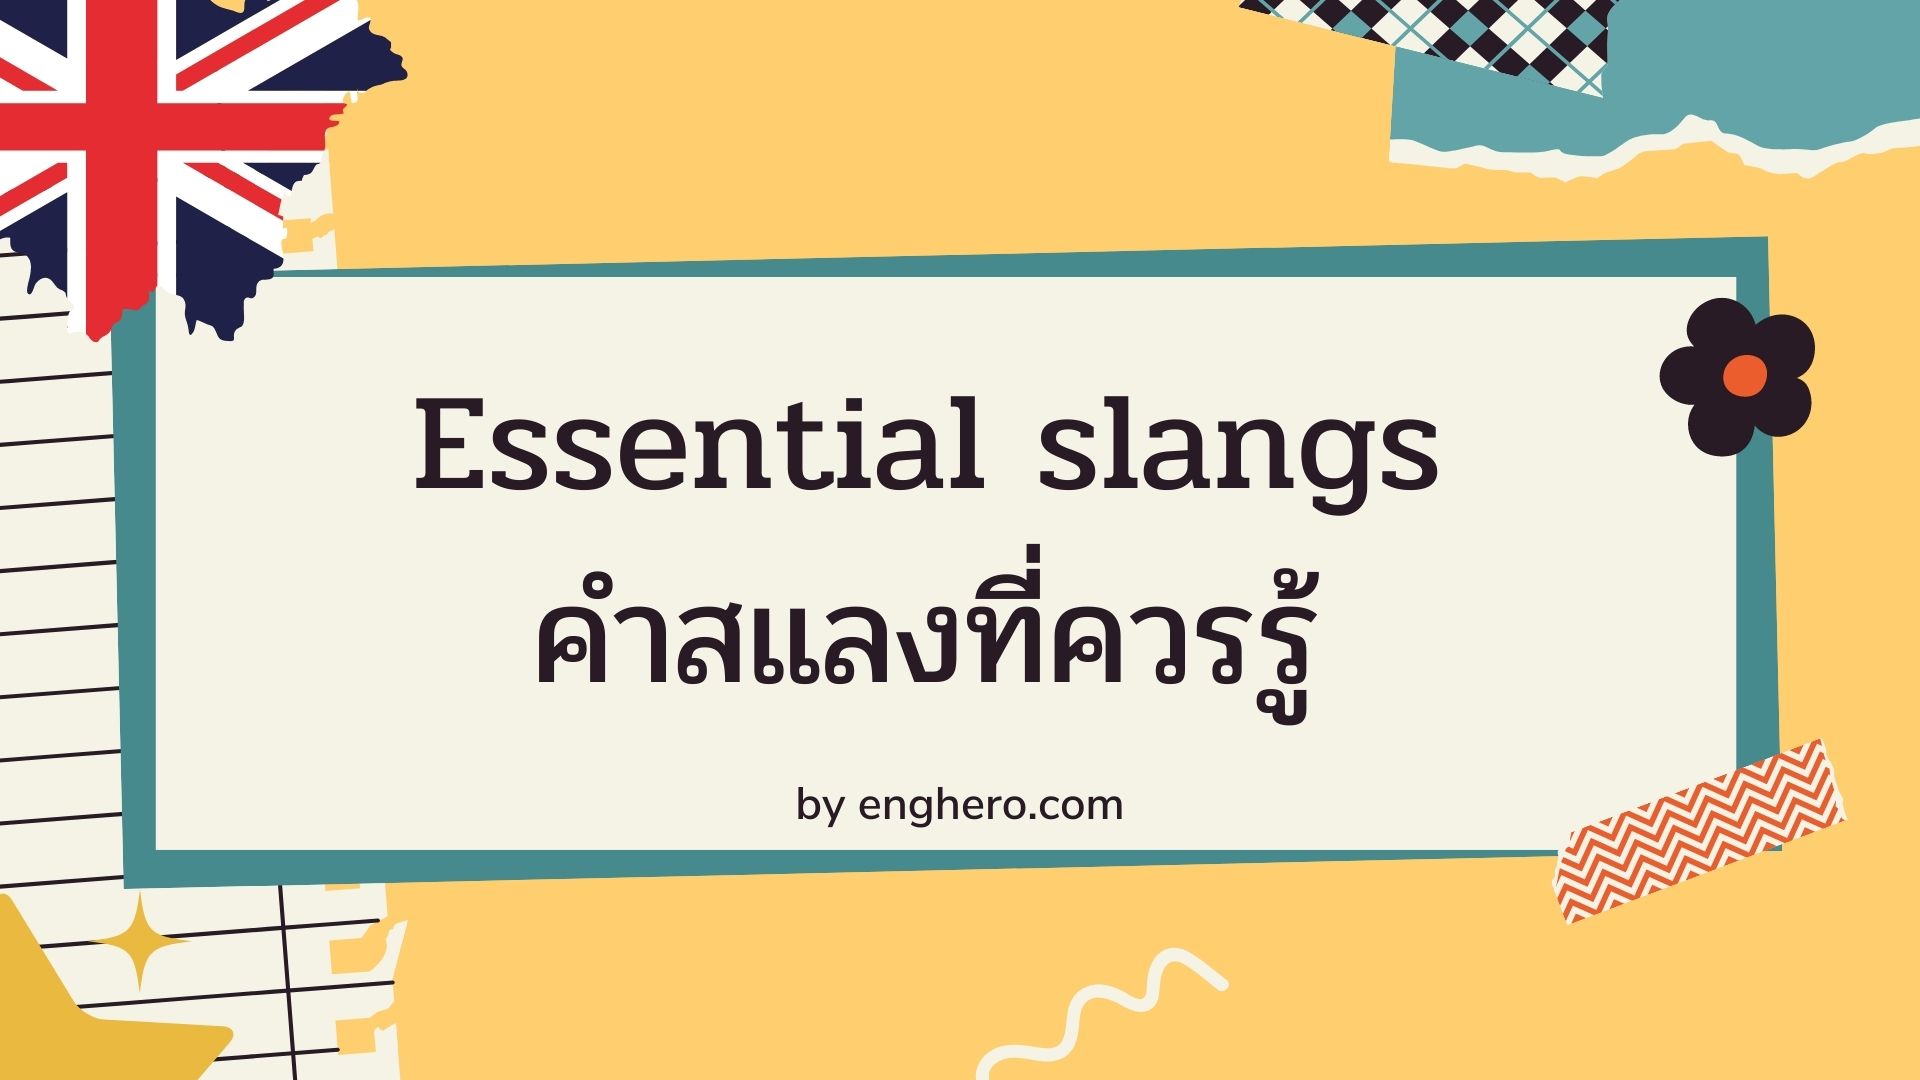 Essential slangs in English - คำสแลงที่คุณควรรู้